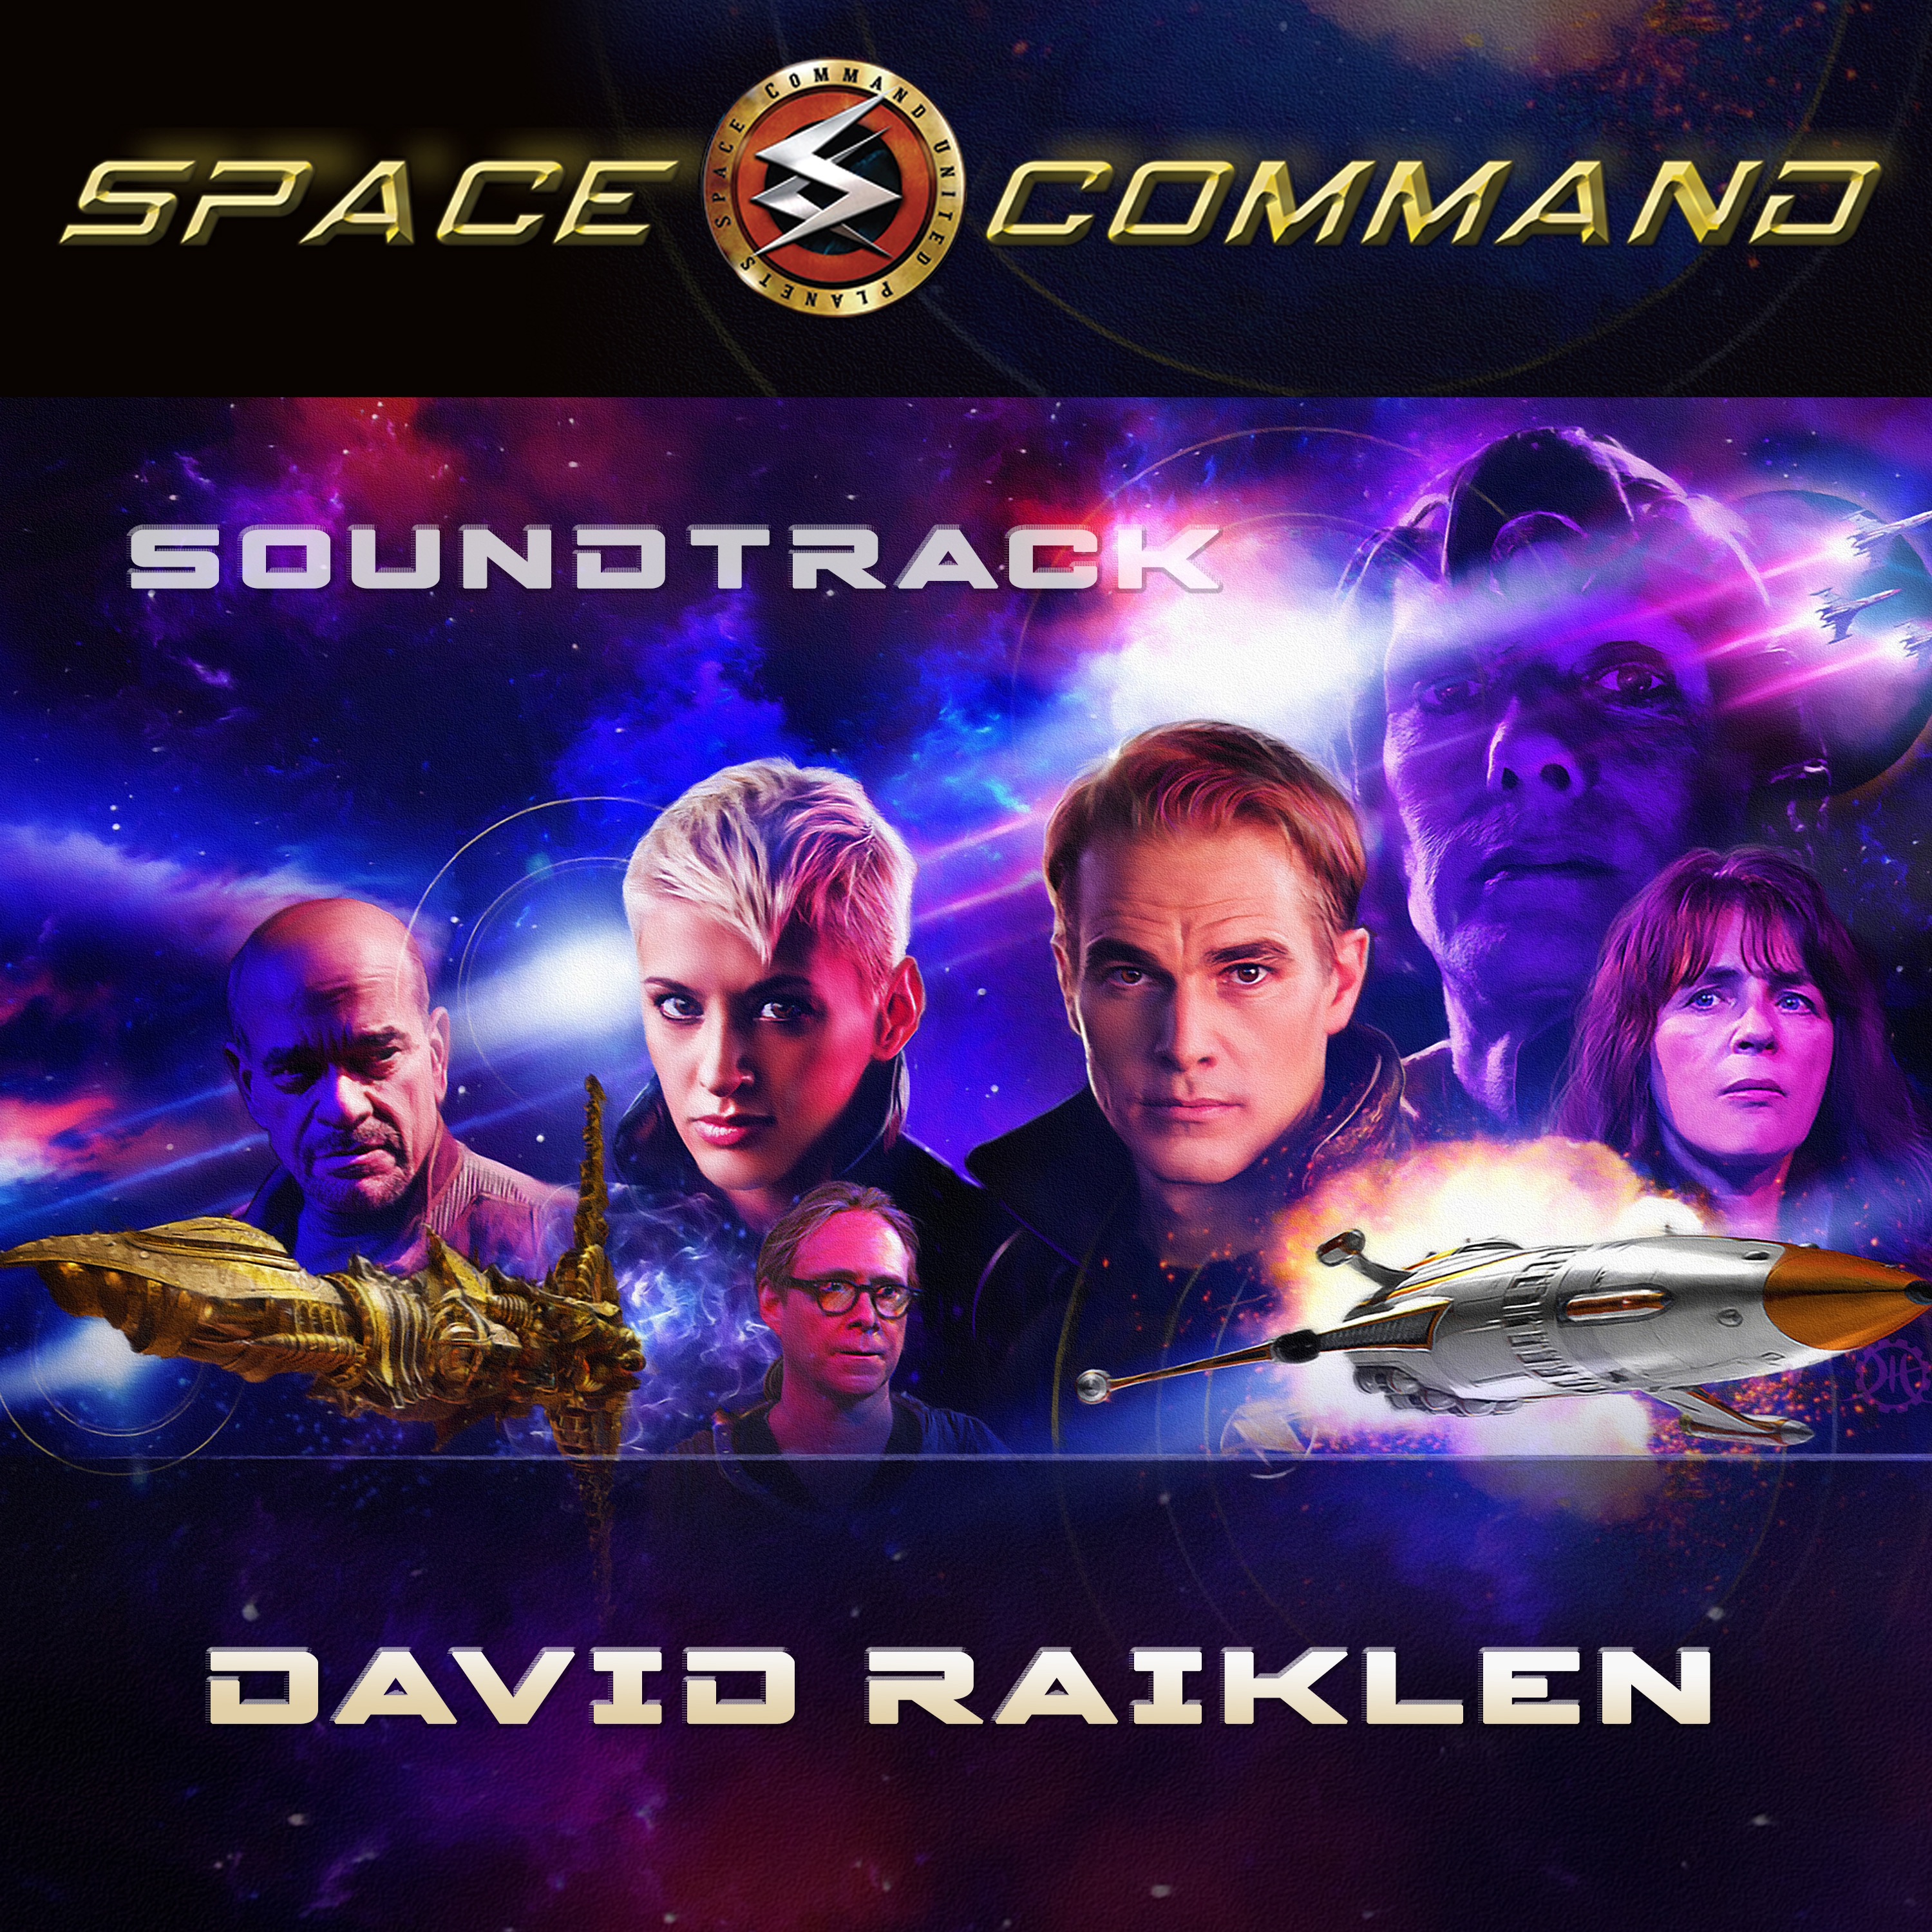 Space Commander. Fallen soundtrack